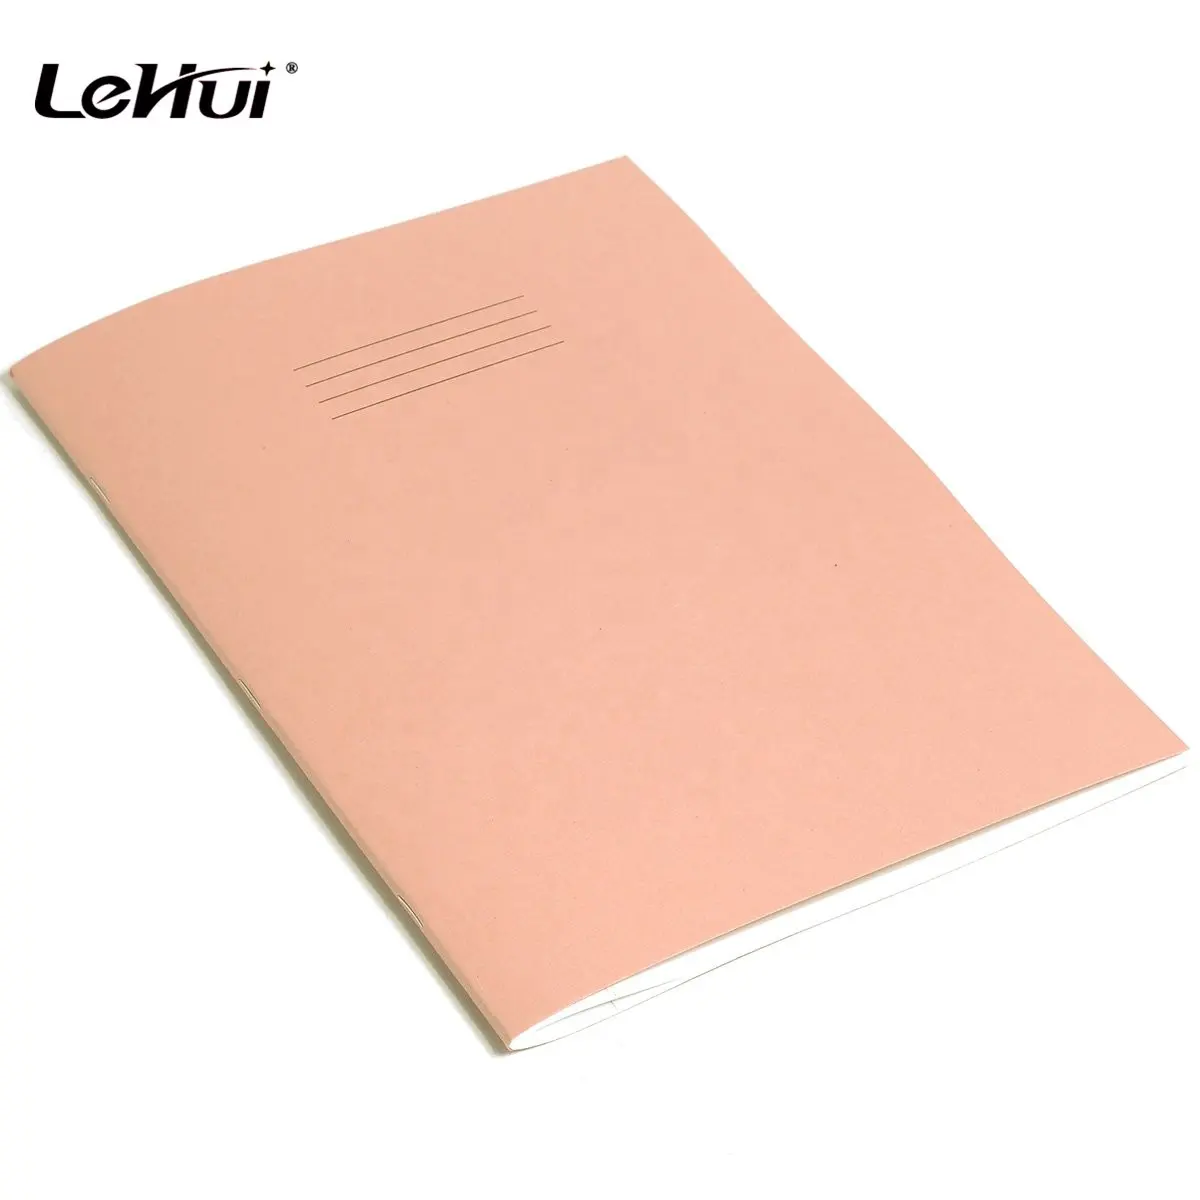 Lehui pabrik murah notebook Sekolah Dasar kertas merah muda ukuran A4 80 halaman bergaris buku latihan untuk sekolah anak-anak